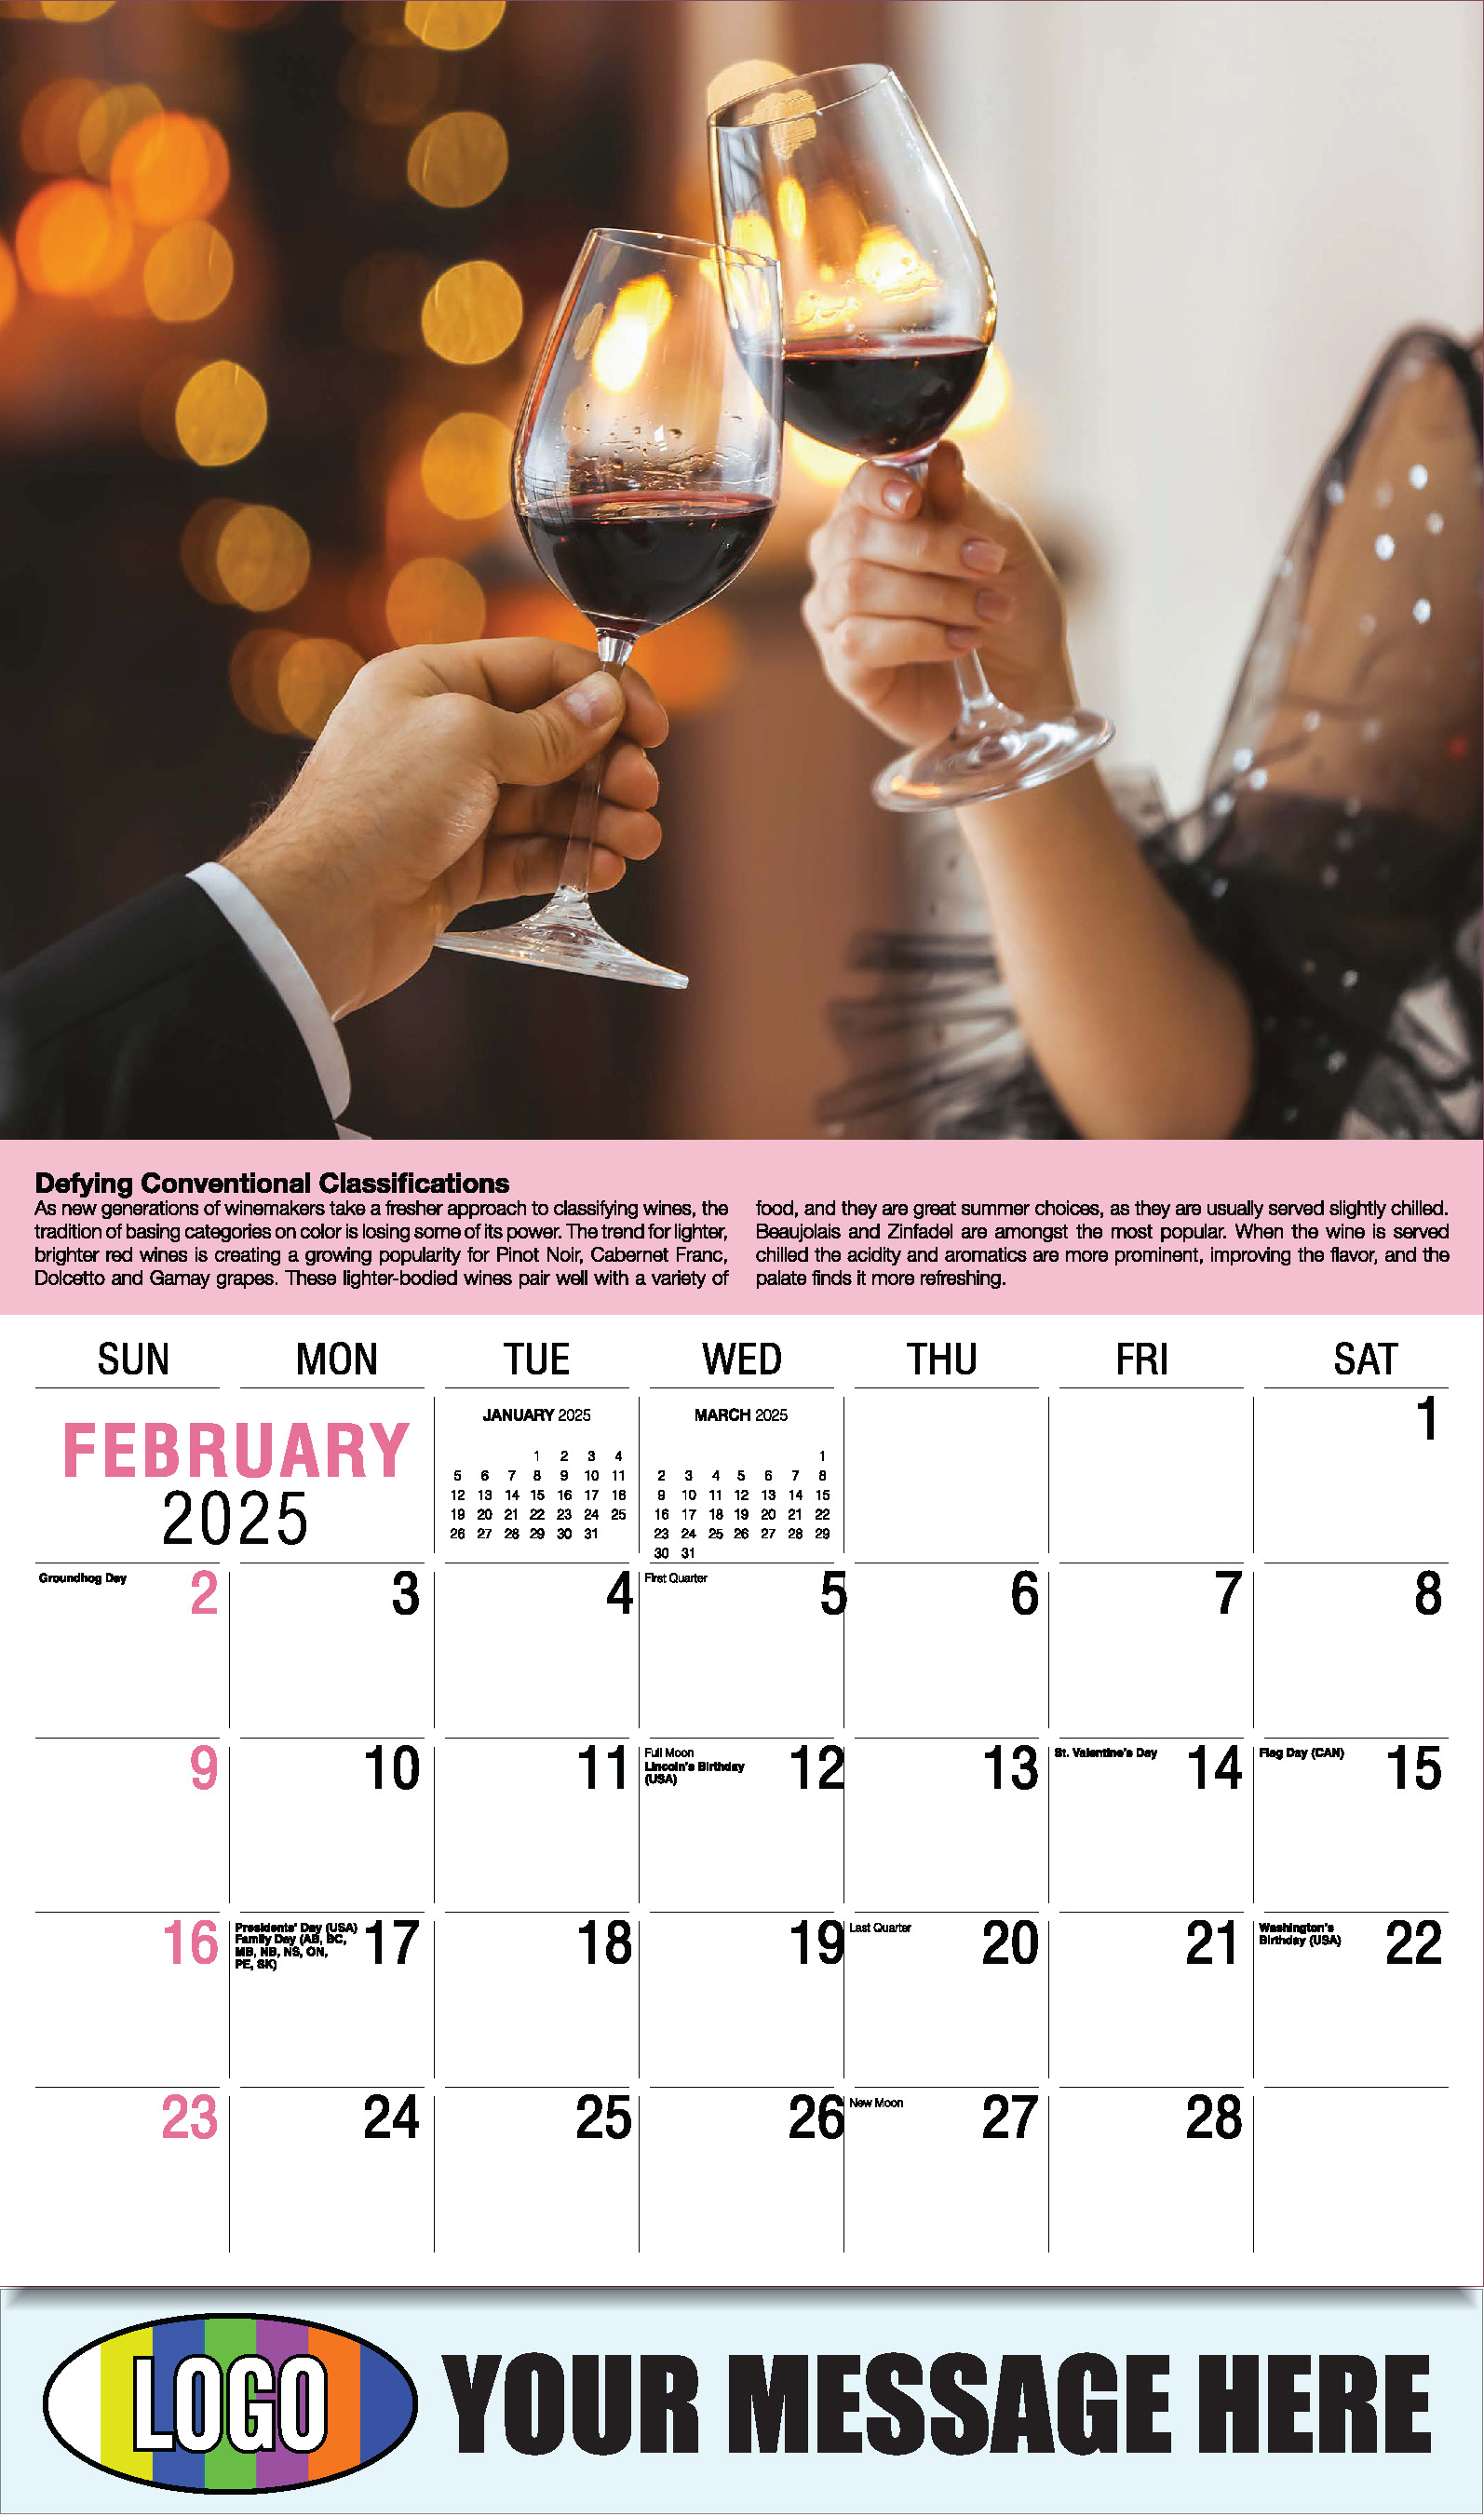 Vintages - Wine Tips 2025 Business Promo Calendar - February